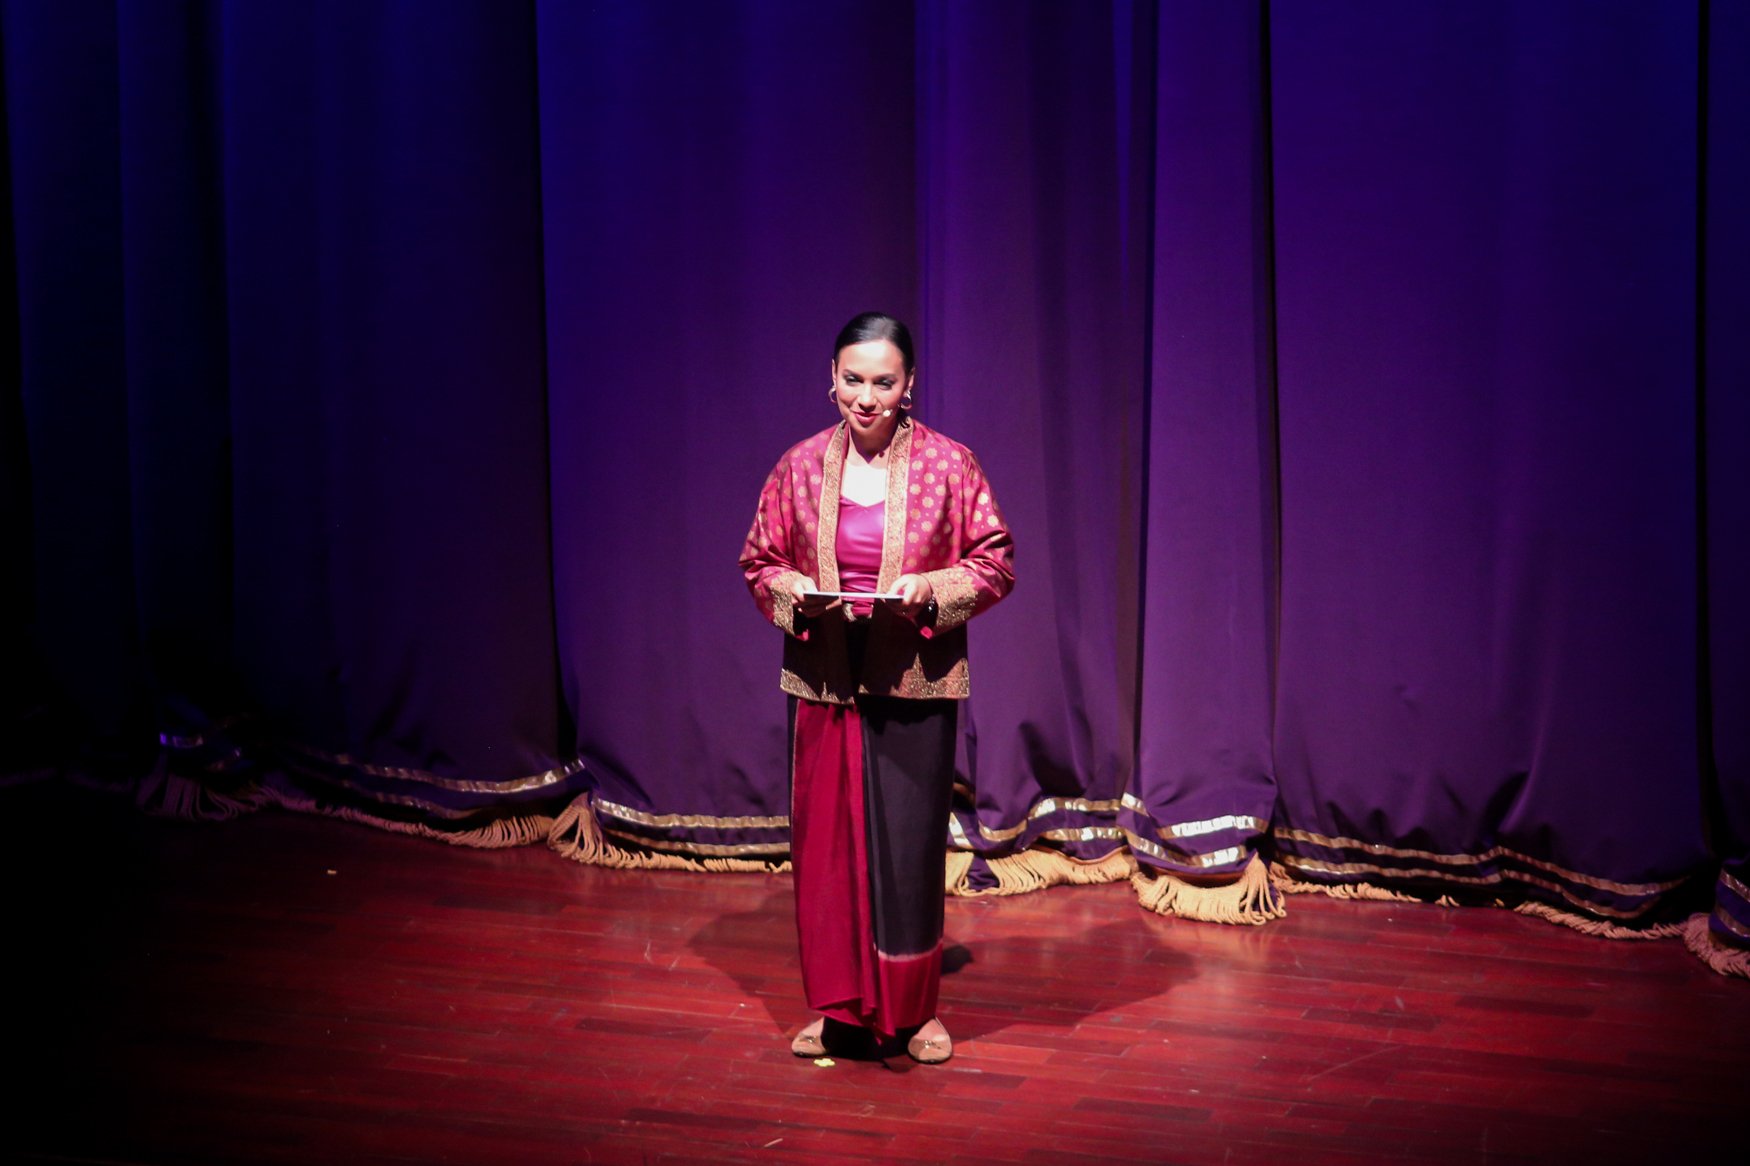 Shahnaz Haque sebagai narator memberikan kata sambutan sebelum dimulainya pertunjukkan teater \